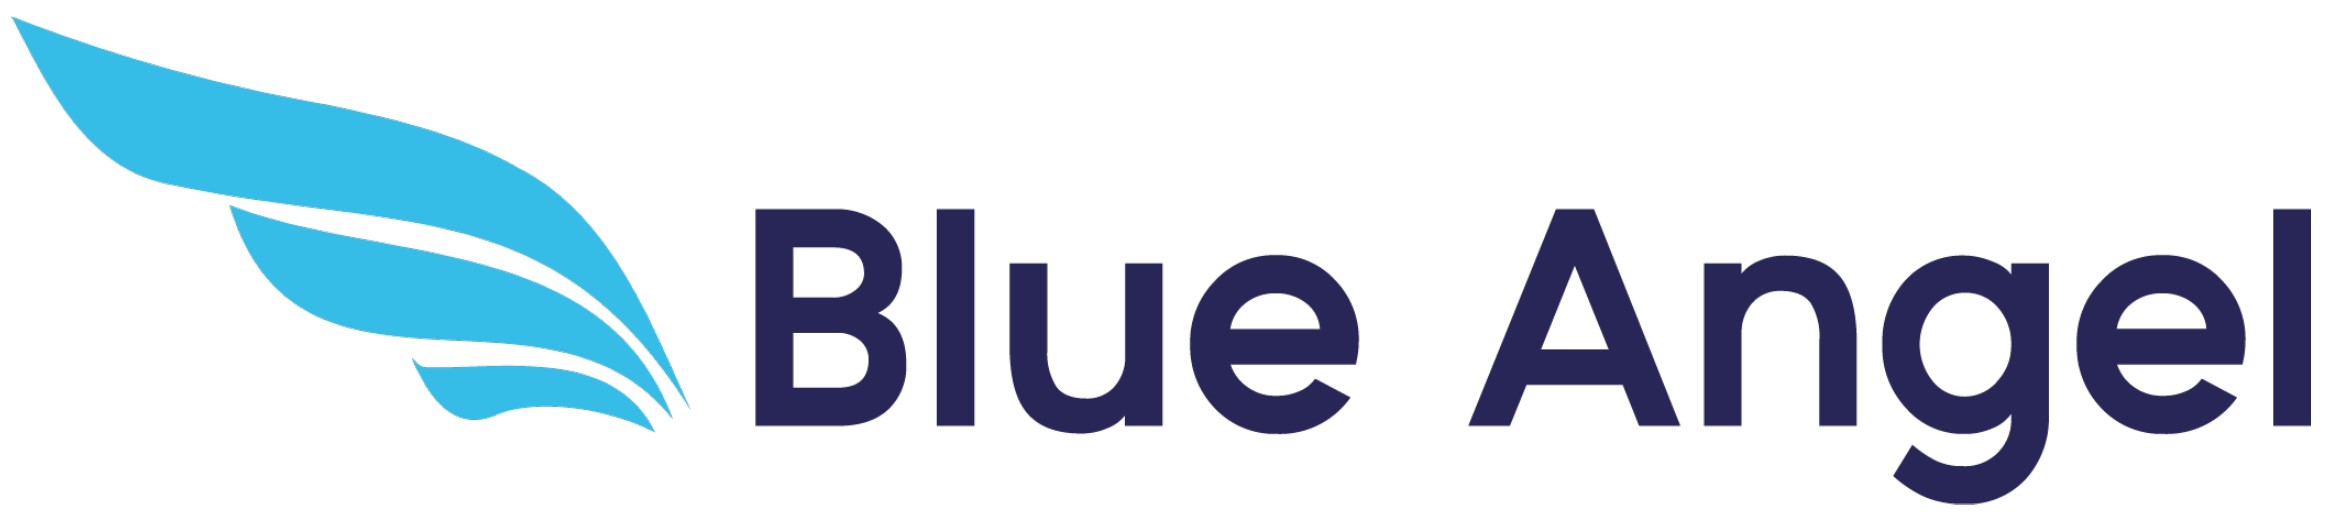 logo for Blue Angel Care